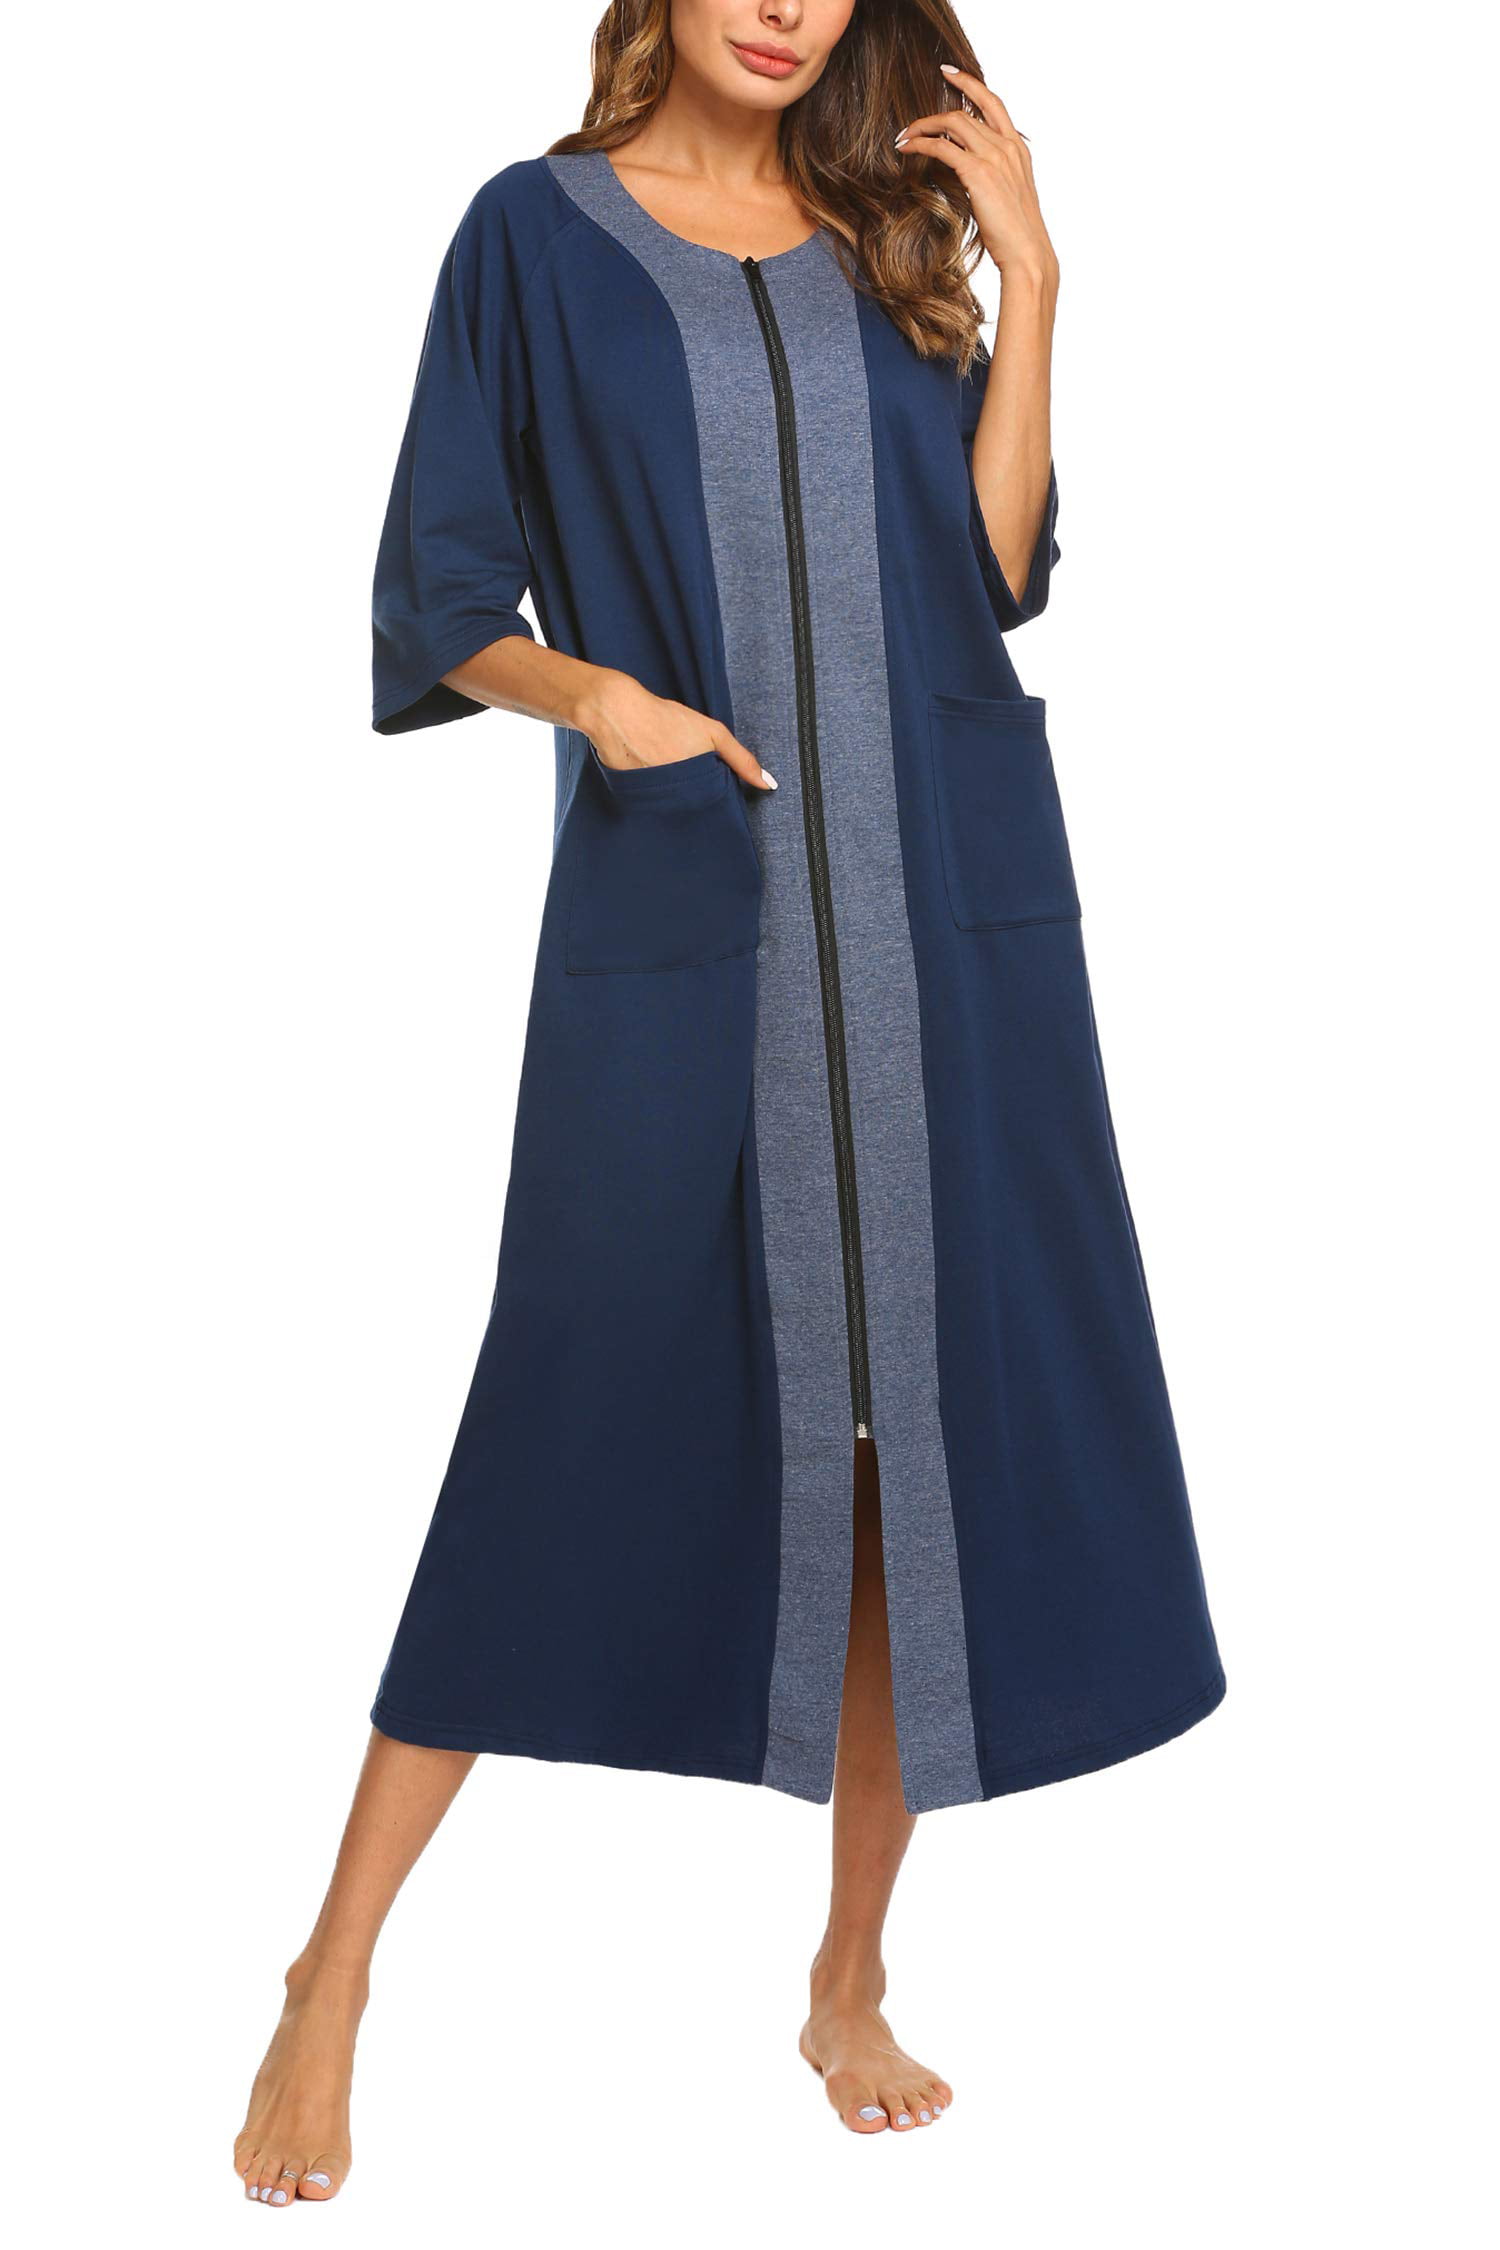 FOLUNSI Housecoat Women's Short Sleeve Zipper Robe Long Nightgown ...